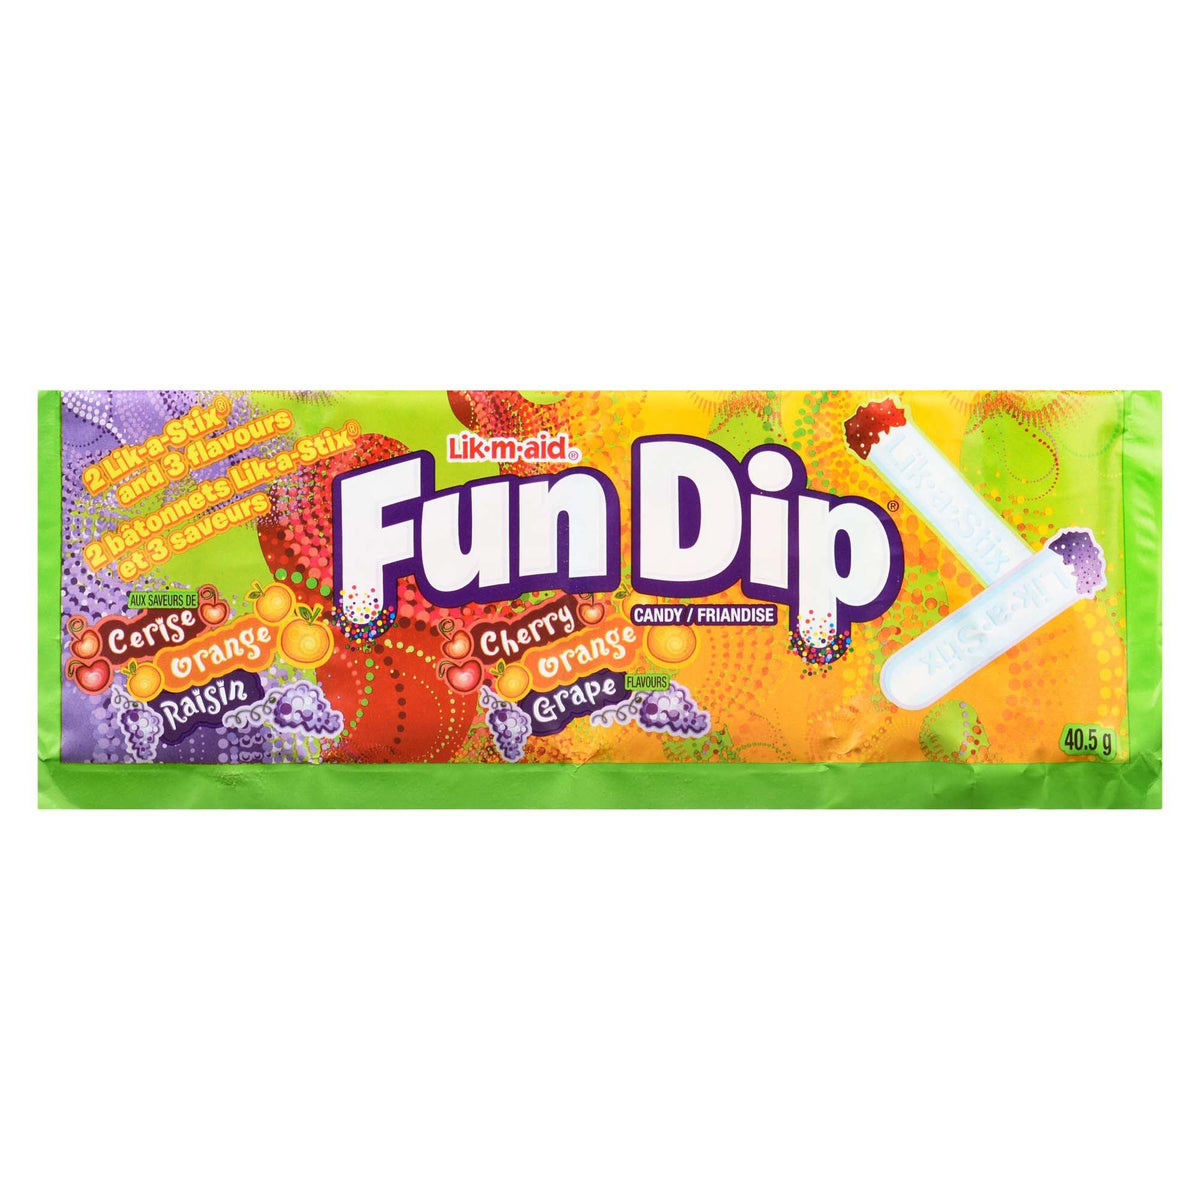 Ludik impulse buying Fun Dip Candy, 40.5g, 1 Count